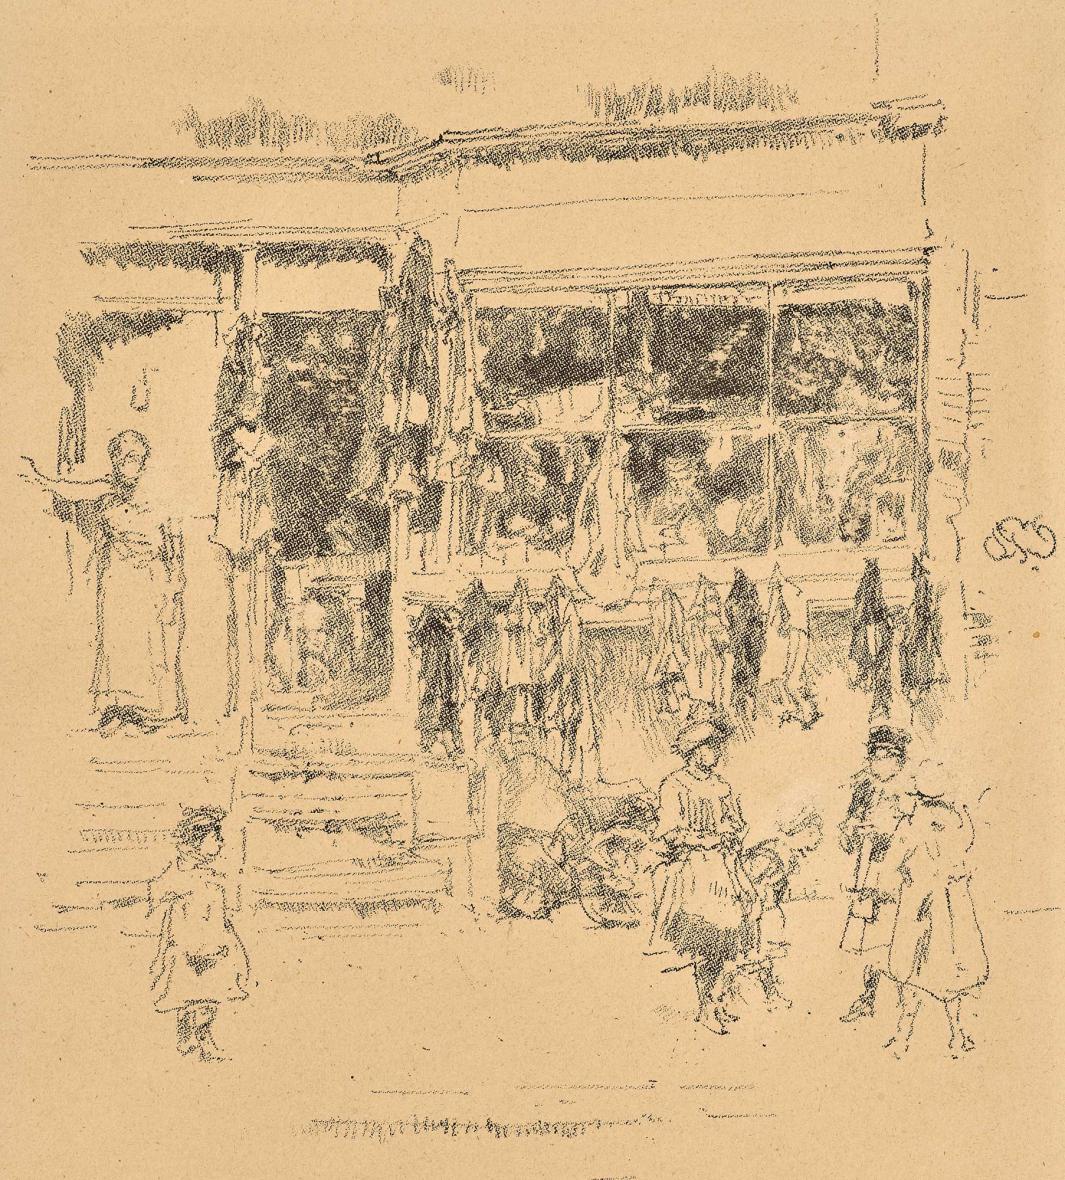 Street scene of rag shop and figures